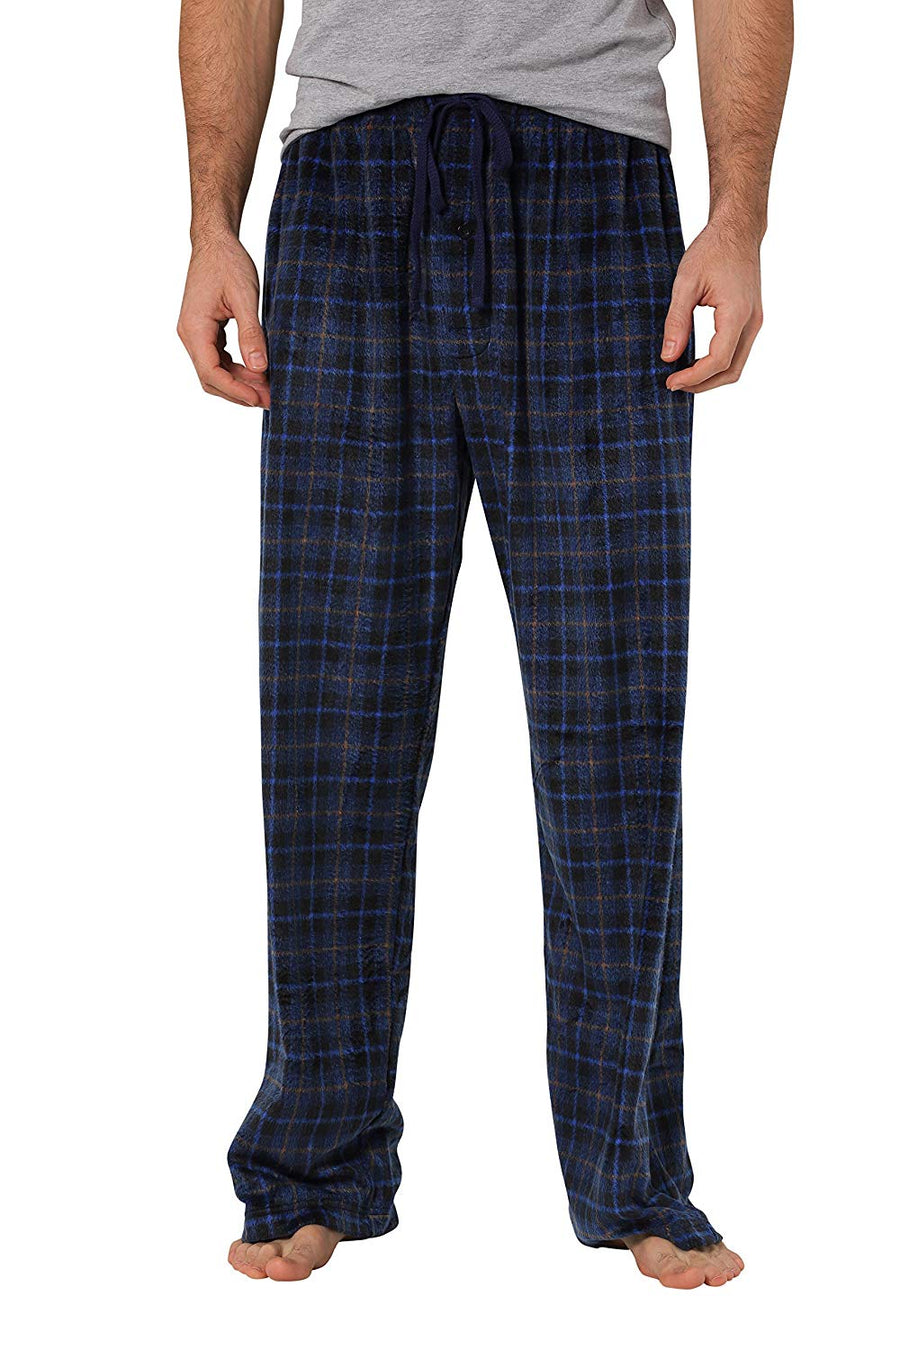 Men'splaid Fleece Pajama Pamts Plaid Pattern Multi-Color - China